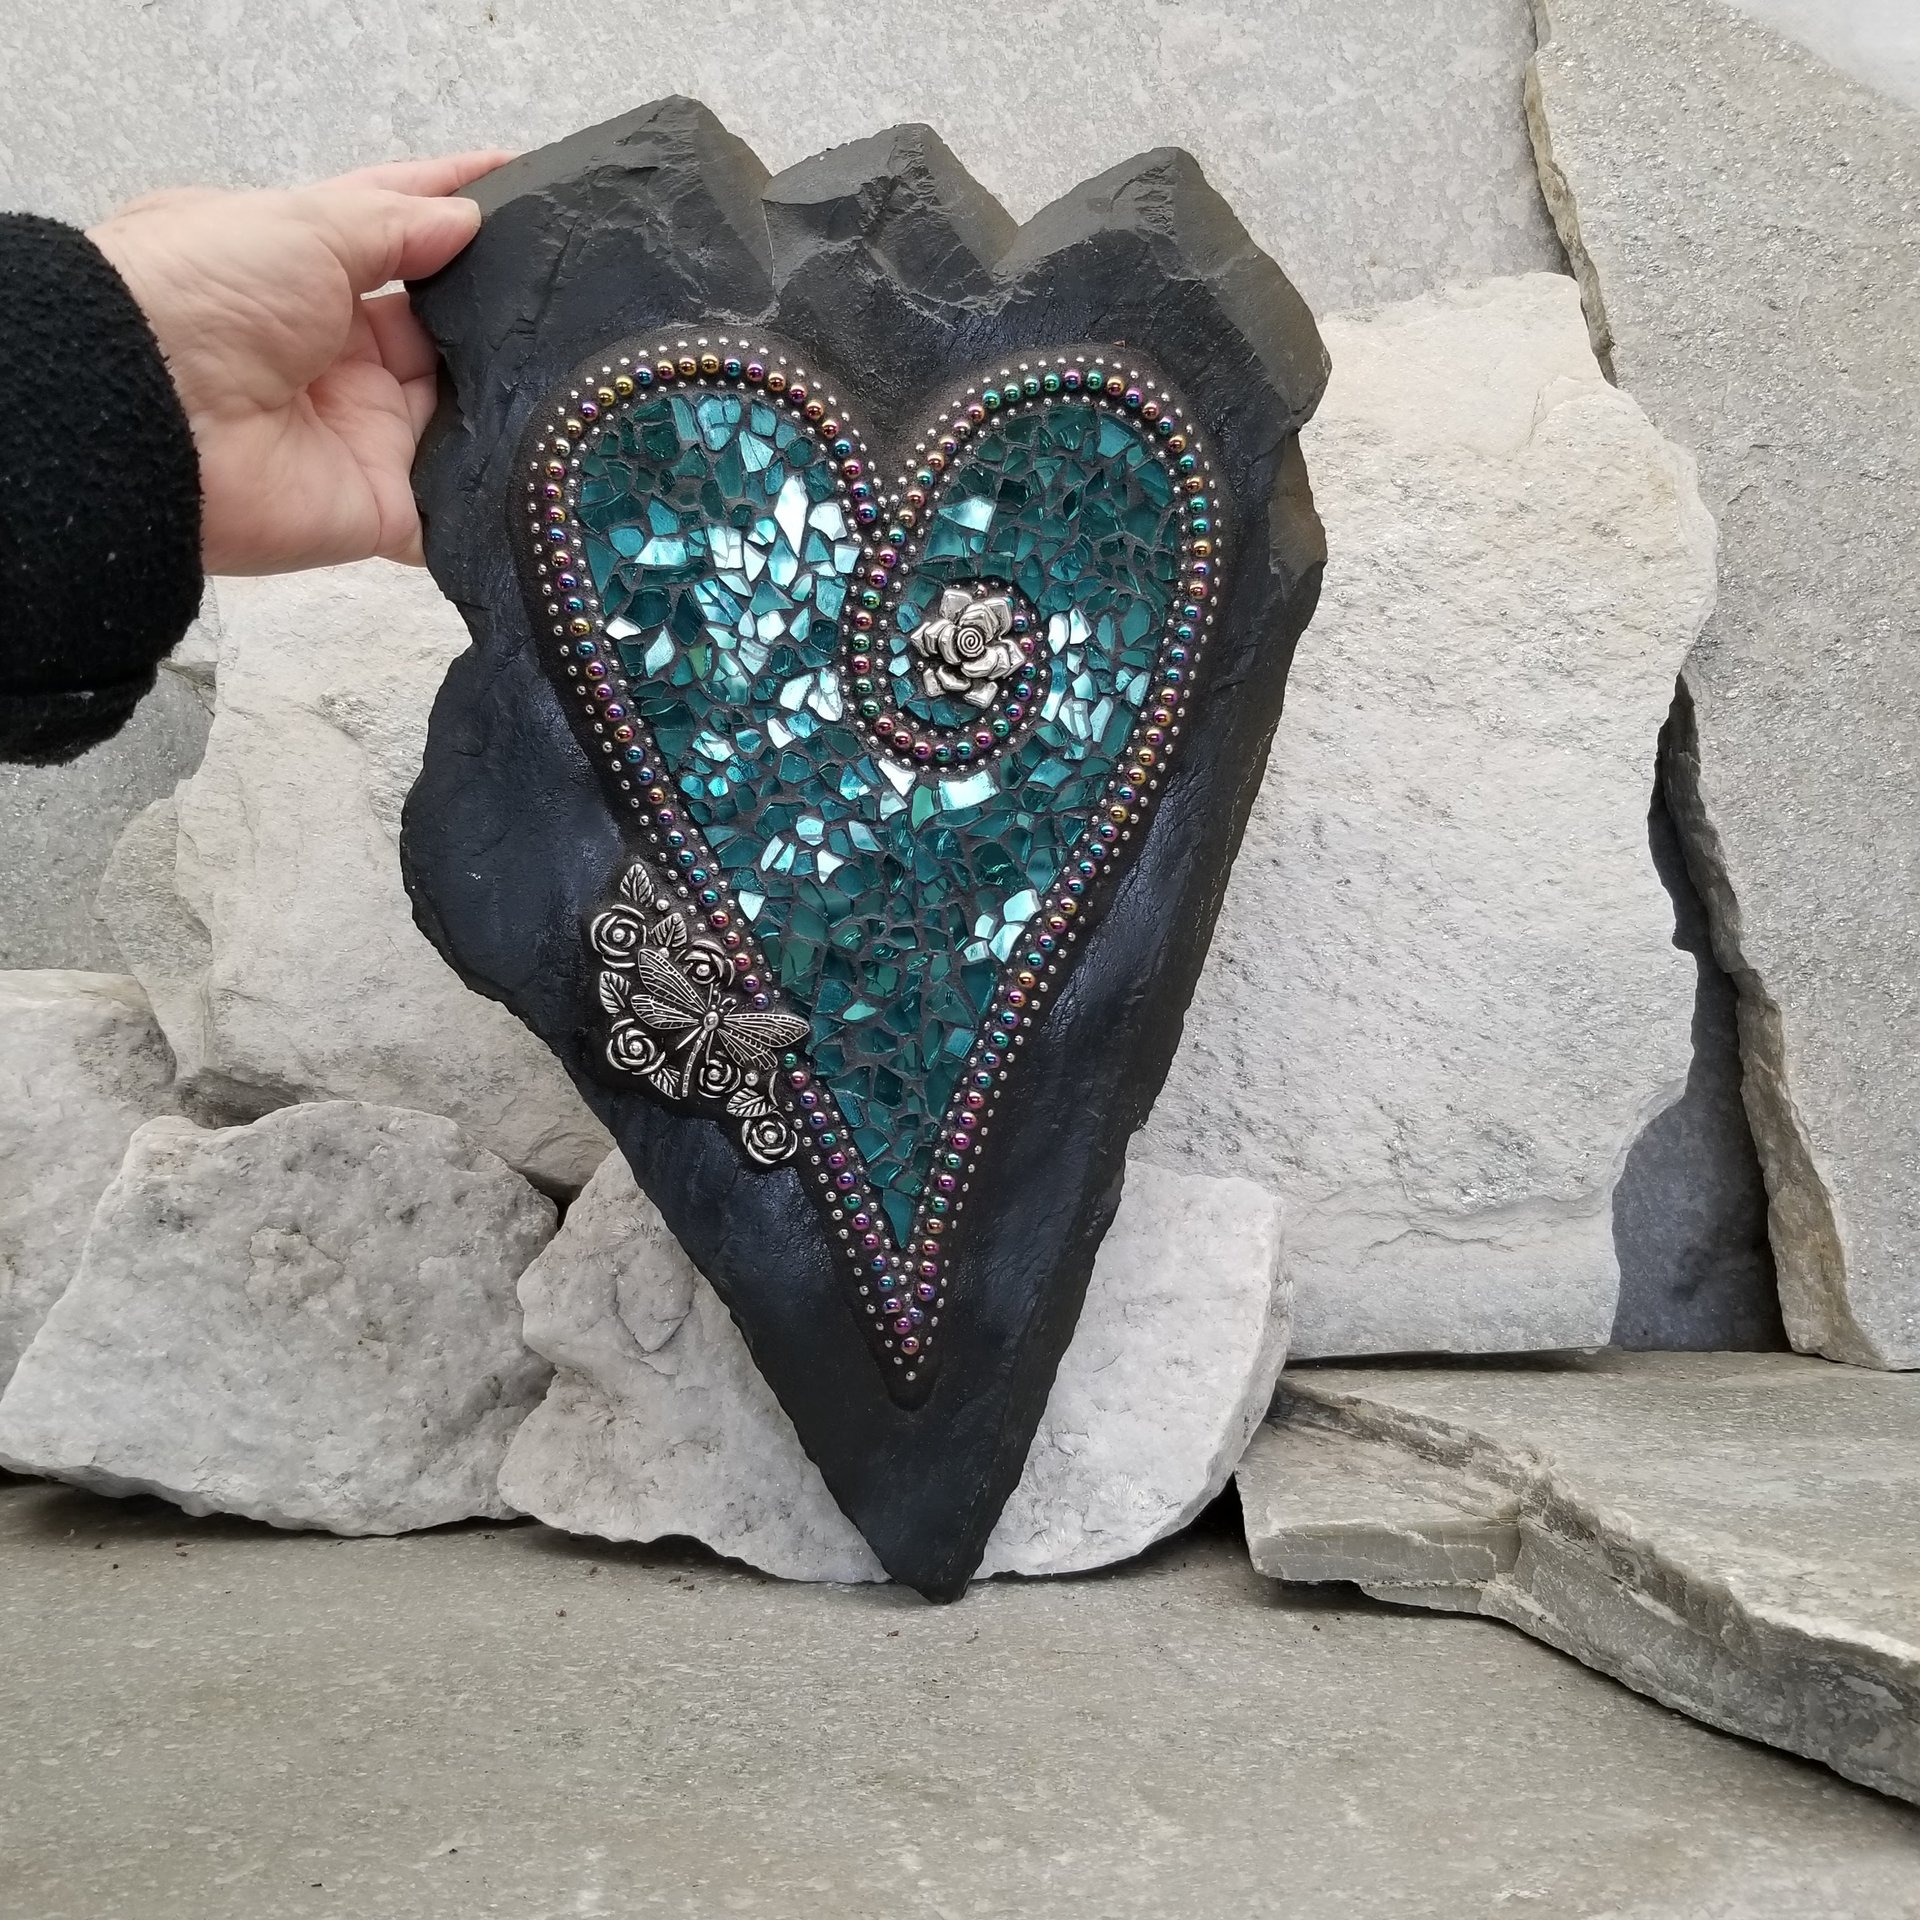 Unique Aquamarine Wall Hanging Heart, Mosaic Garden Stone, Porch Decor, Wall Decor, Dragonfly